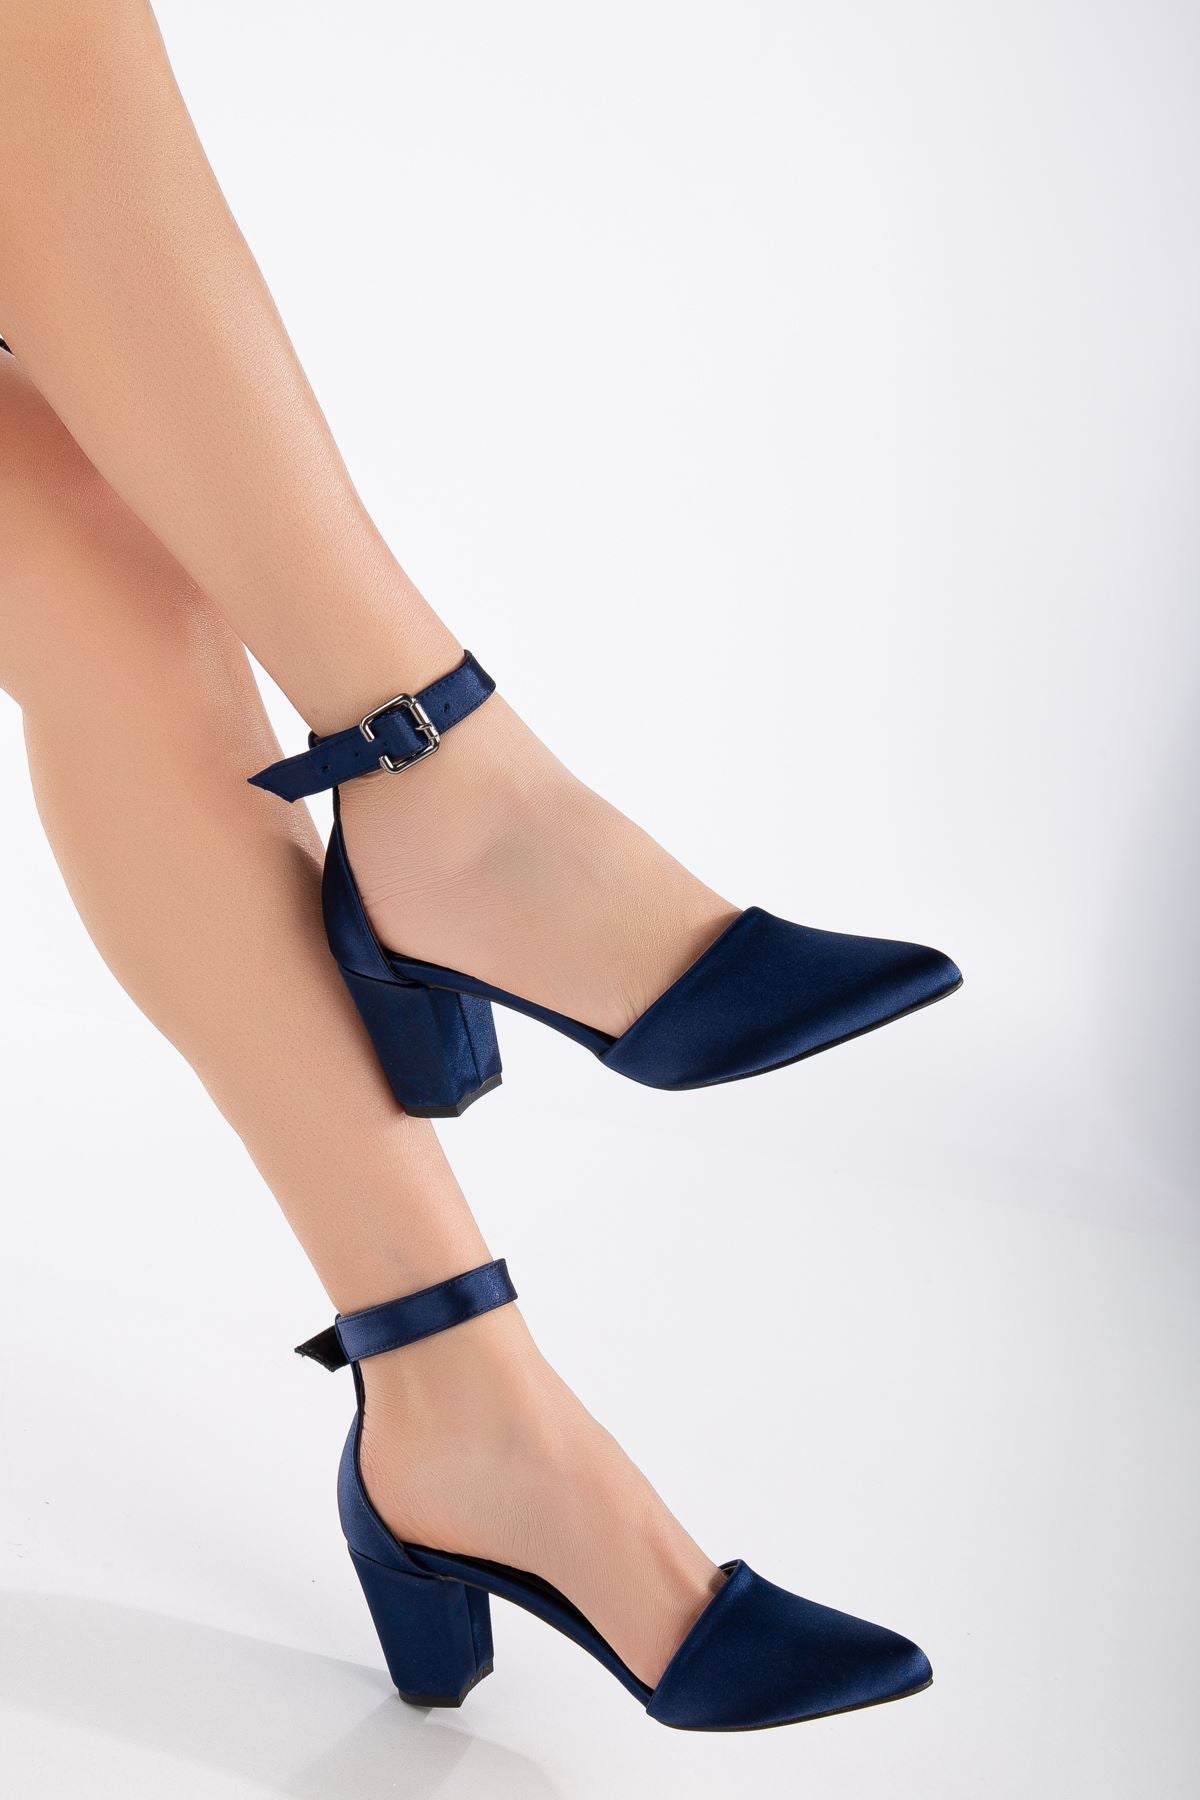 Lottis Navy Blue Satin Detailed Heeled Women's Shoes - STREETMODE™